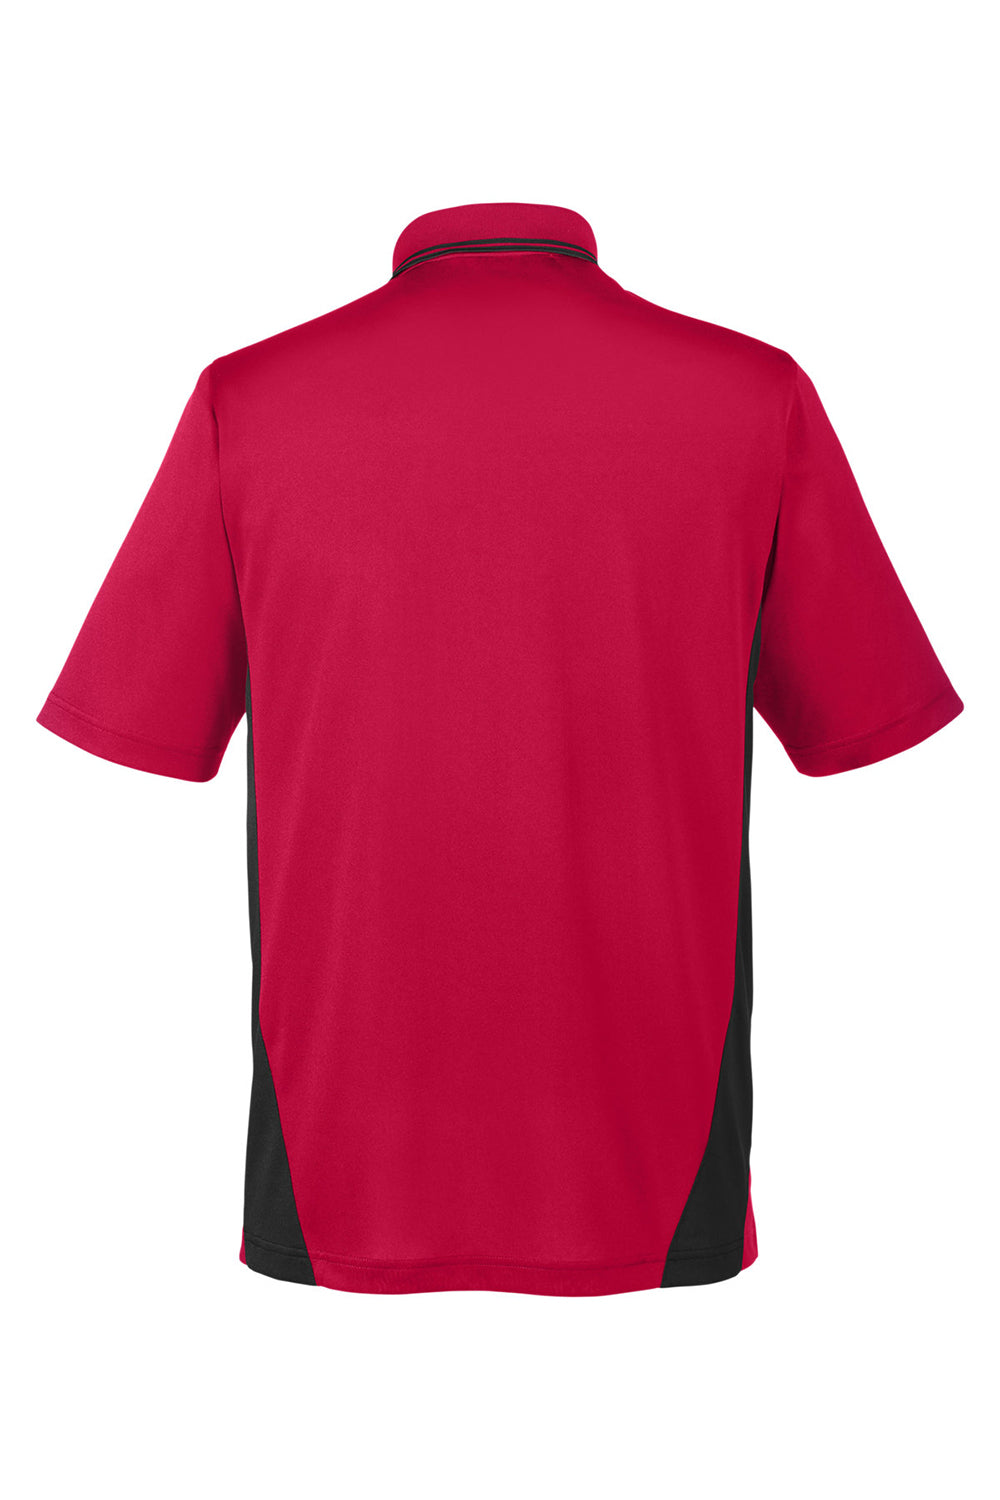 Harriton M386/M386T Mens Flash Performance Moisture Wicking Colorblock Short Sleeve Polo Shirt Red/Black Flat Back